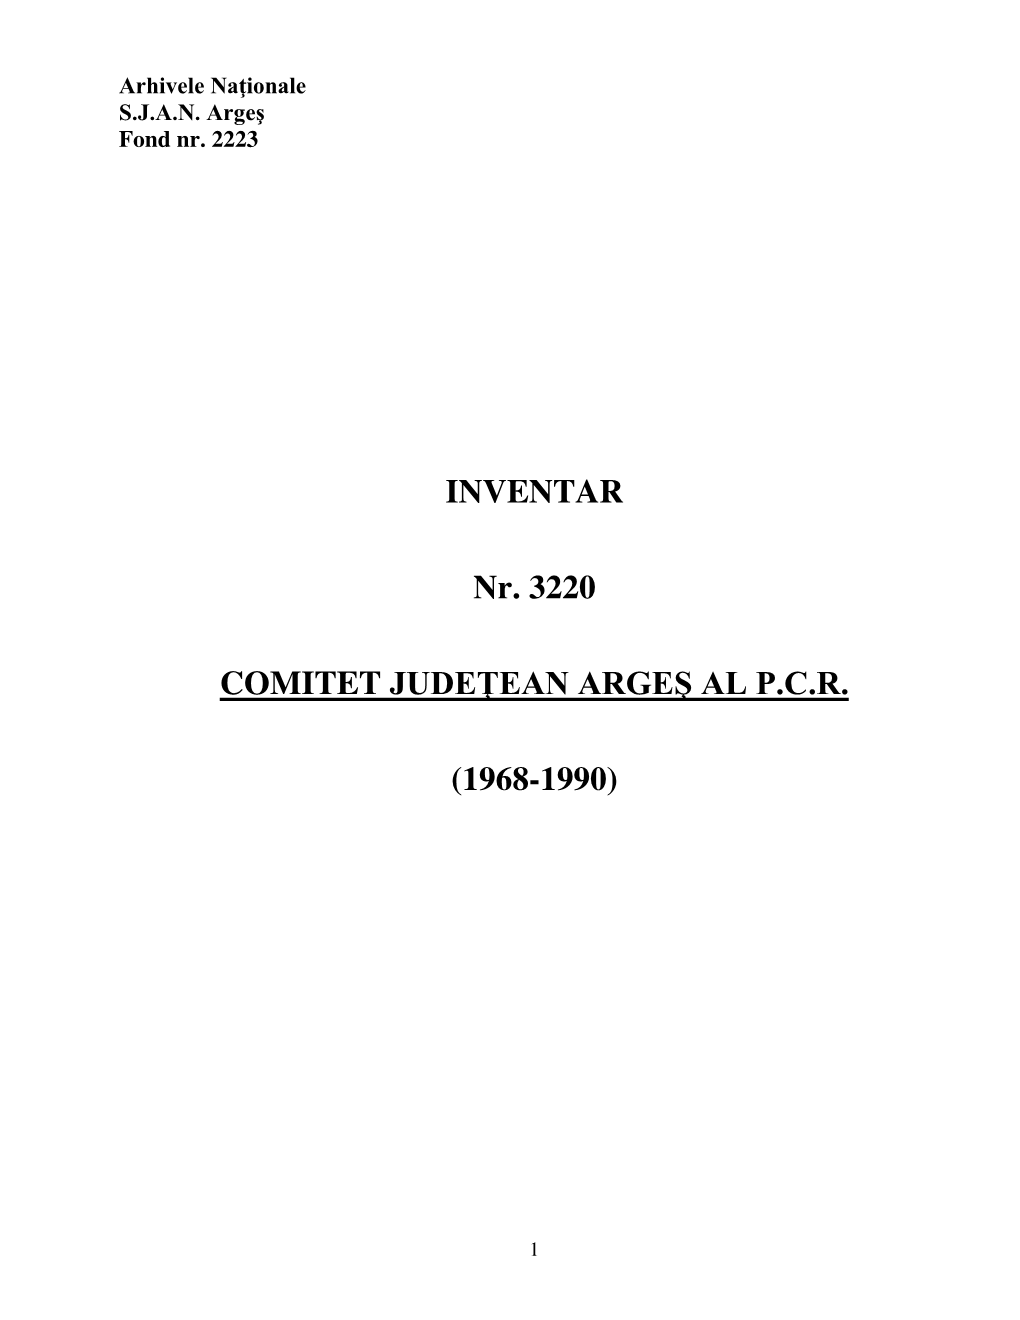 INVENTAR Nr. 3220 COMITET JUDE EAN ARGEŞ AL P.C.R. (1968-1990)